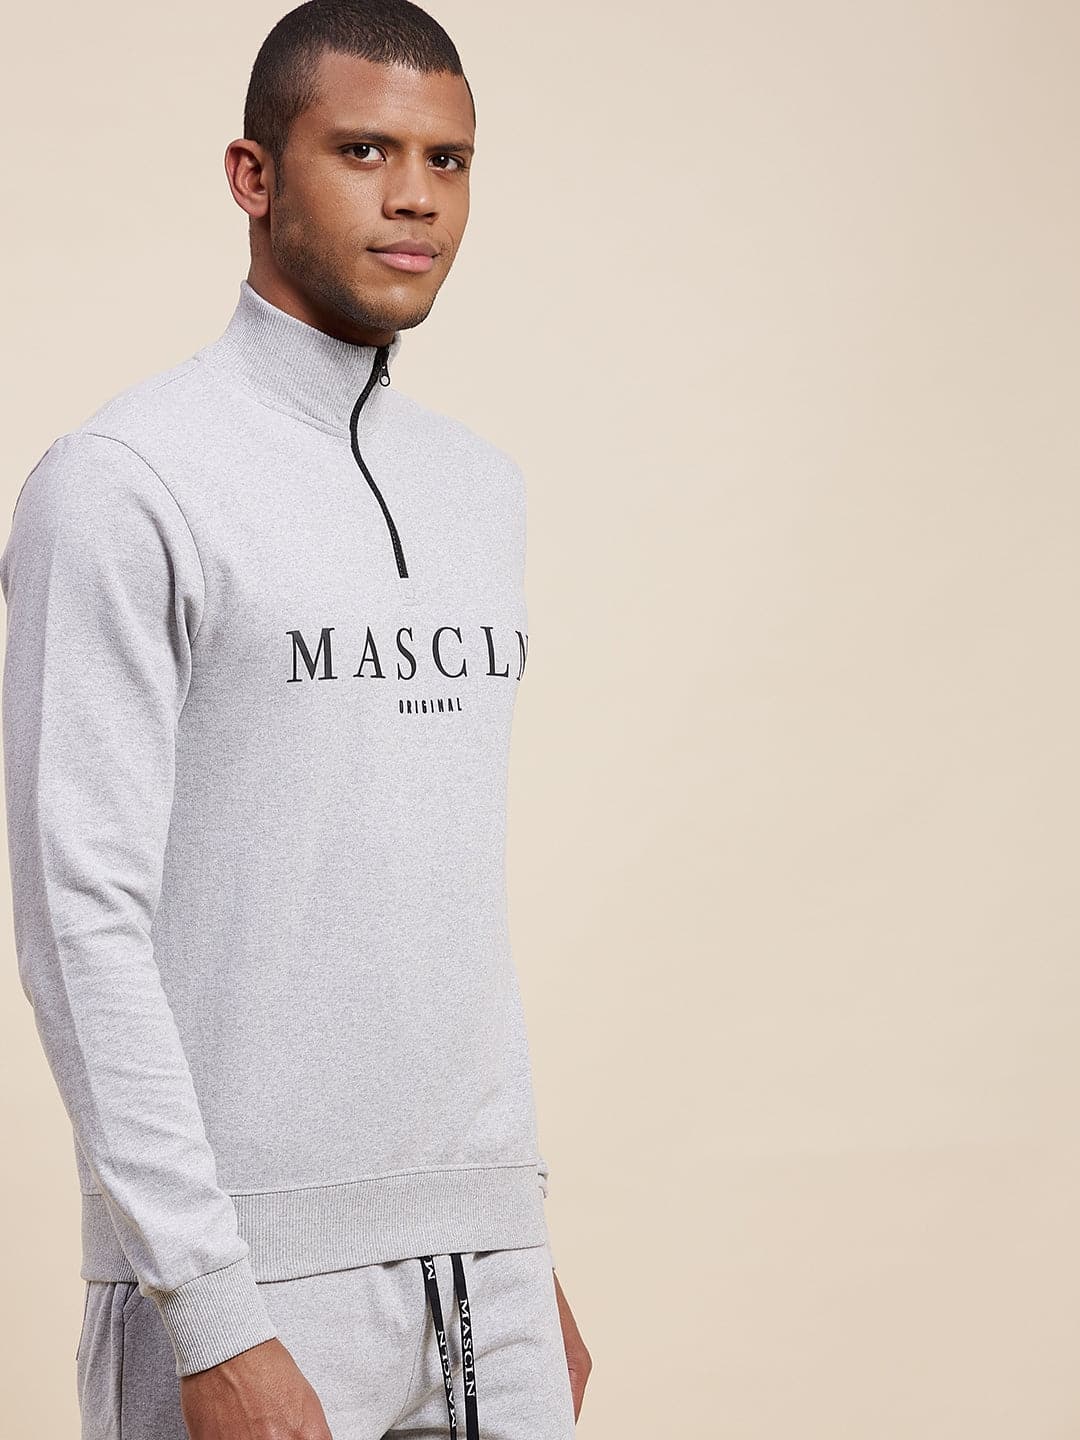 Men's Grey High Neck Half Zipper MASCLN Sweatshirt - LYUSH-MASCLN